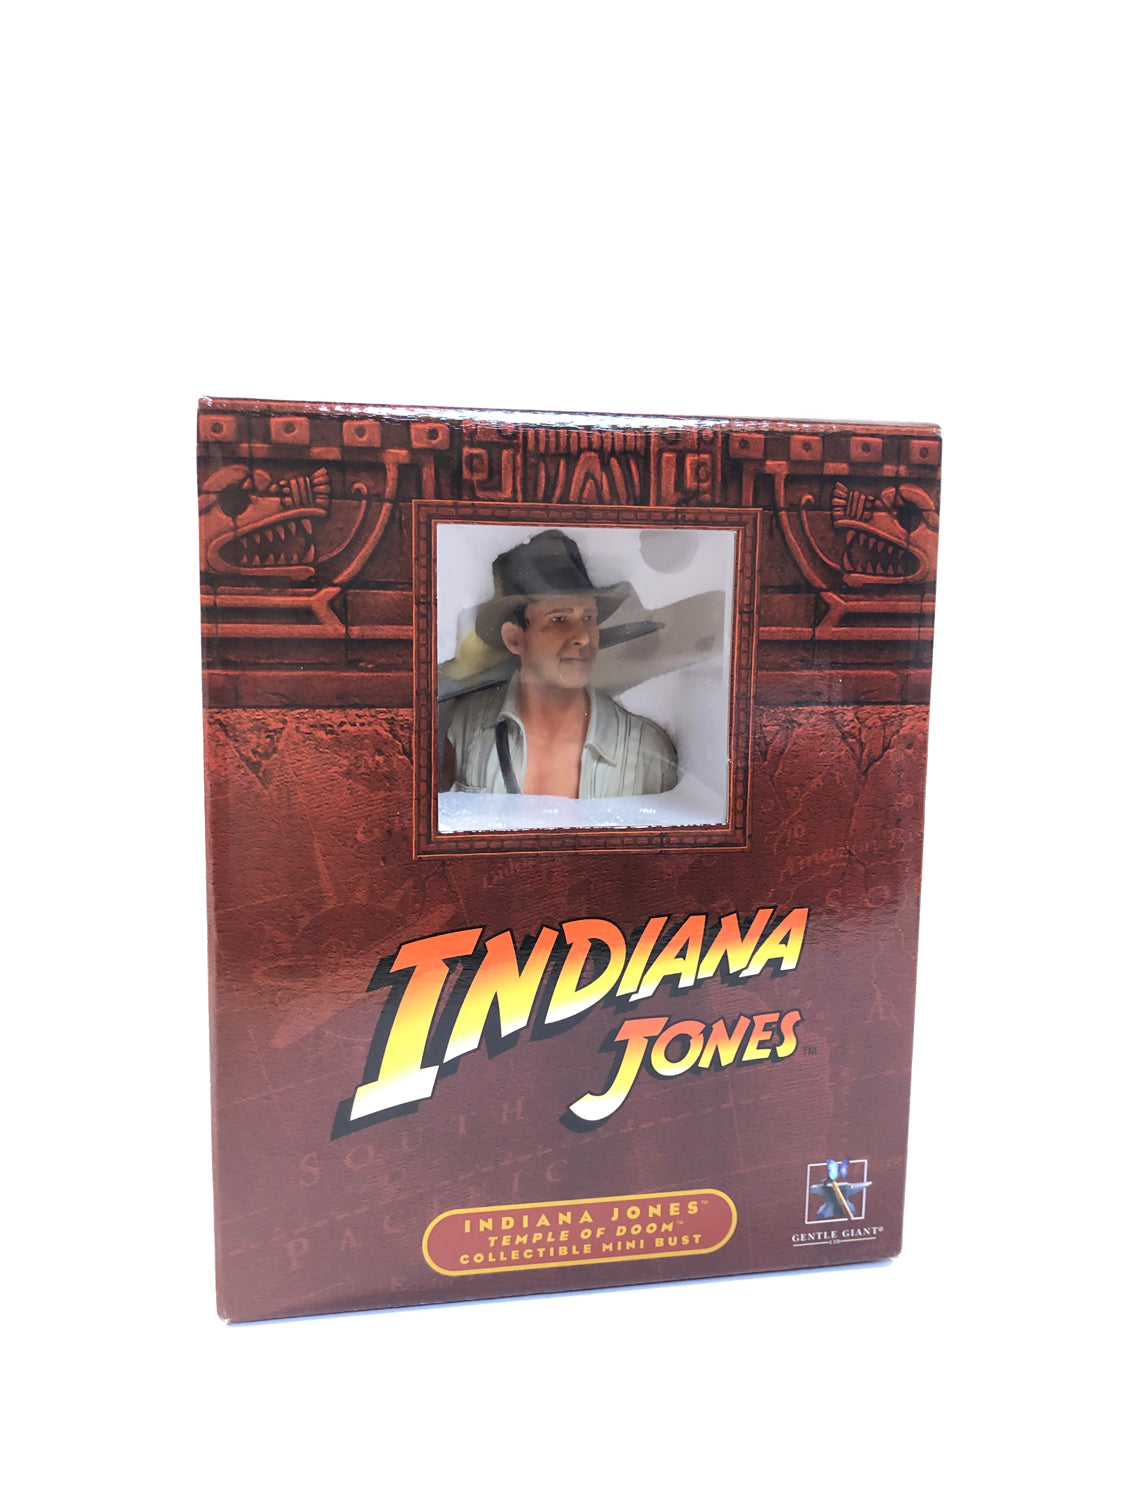 Indiana Jones and the Temple of Doom mini bust